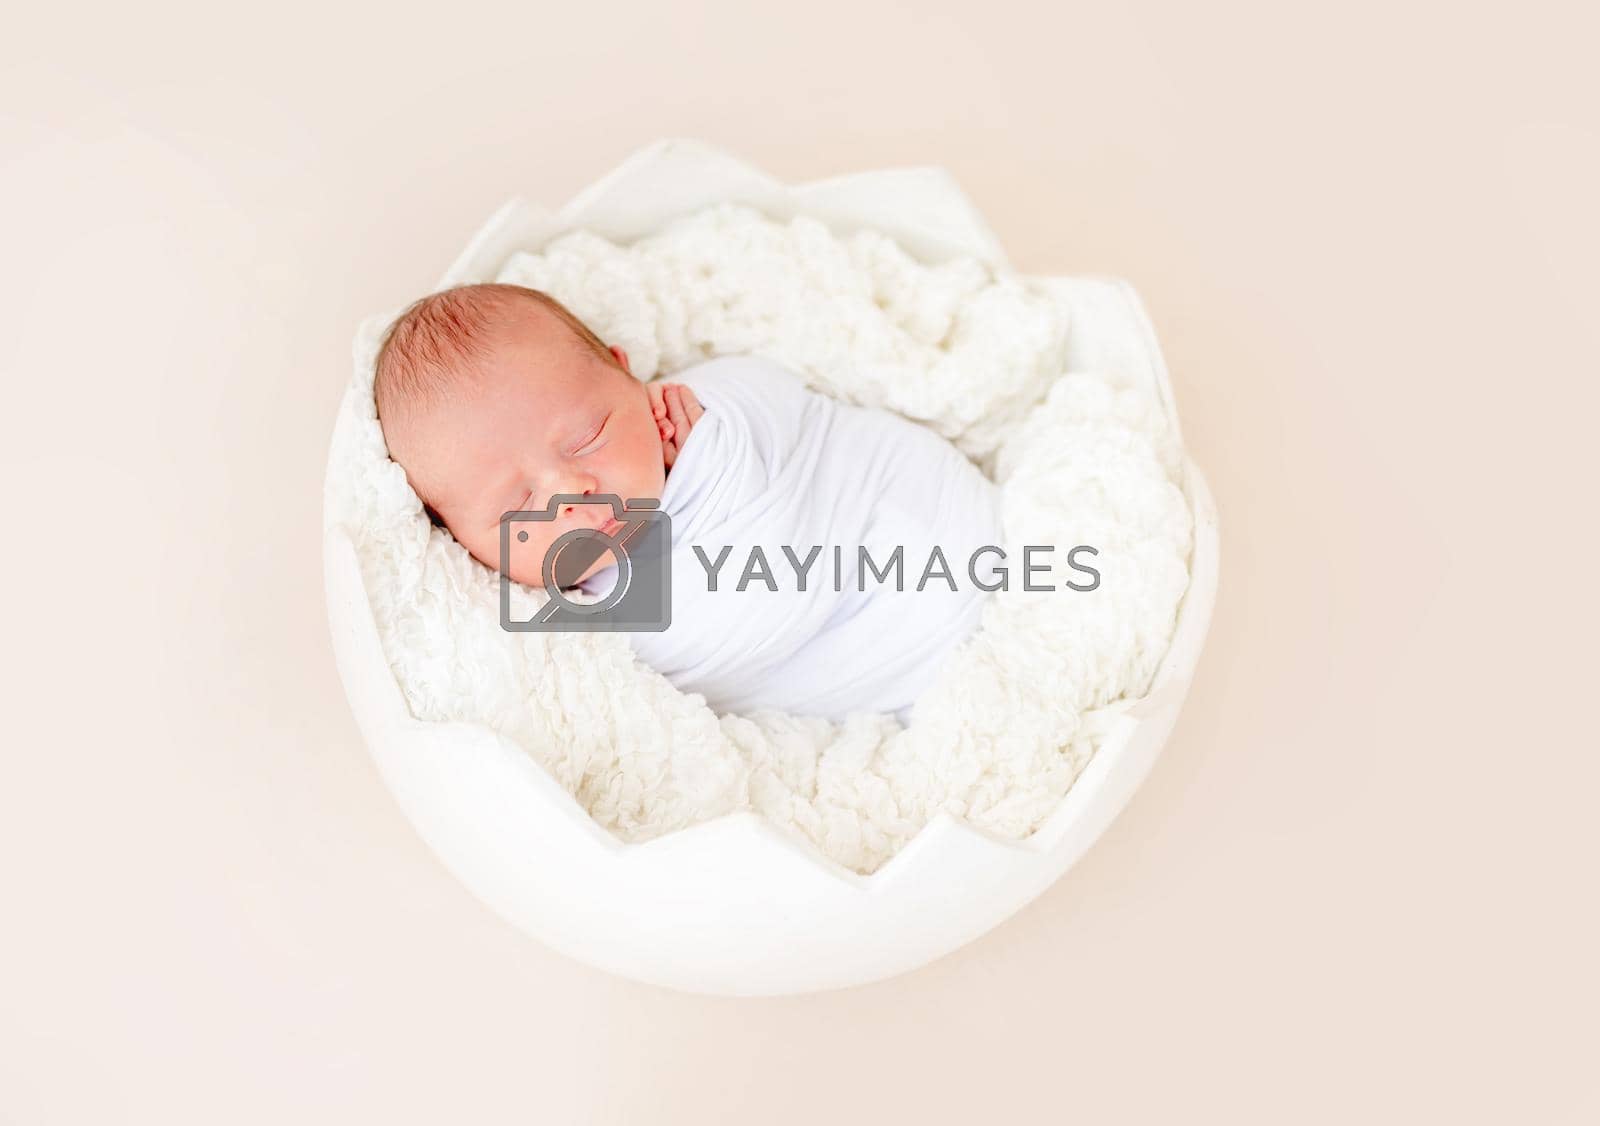 Royalty free image of Neweborn sleeping in egg shaped cradle by tan4ikk1